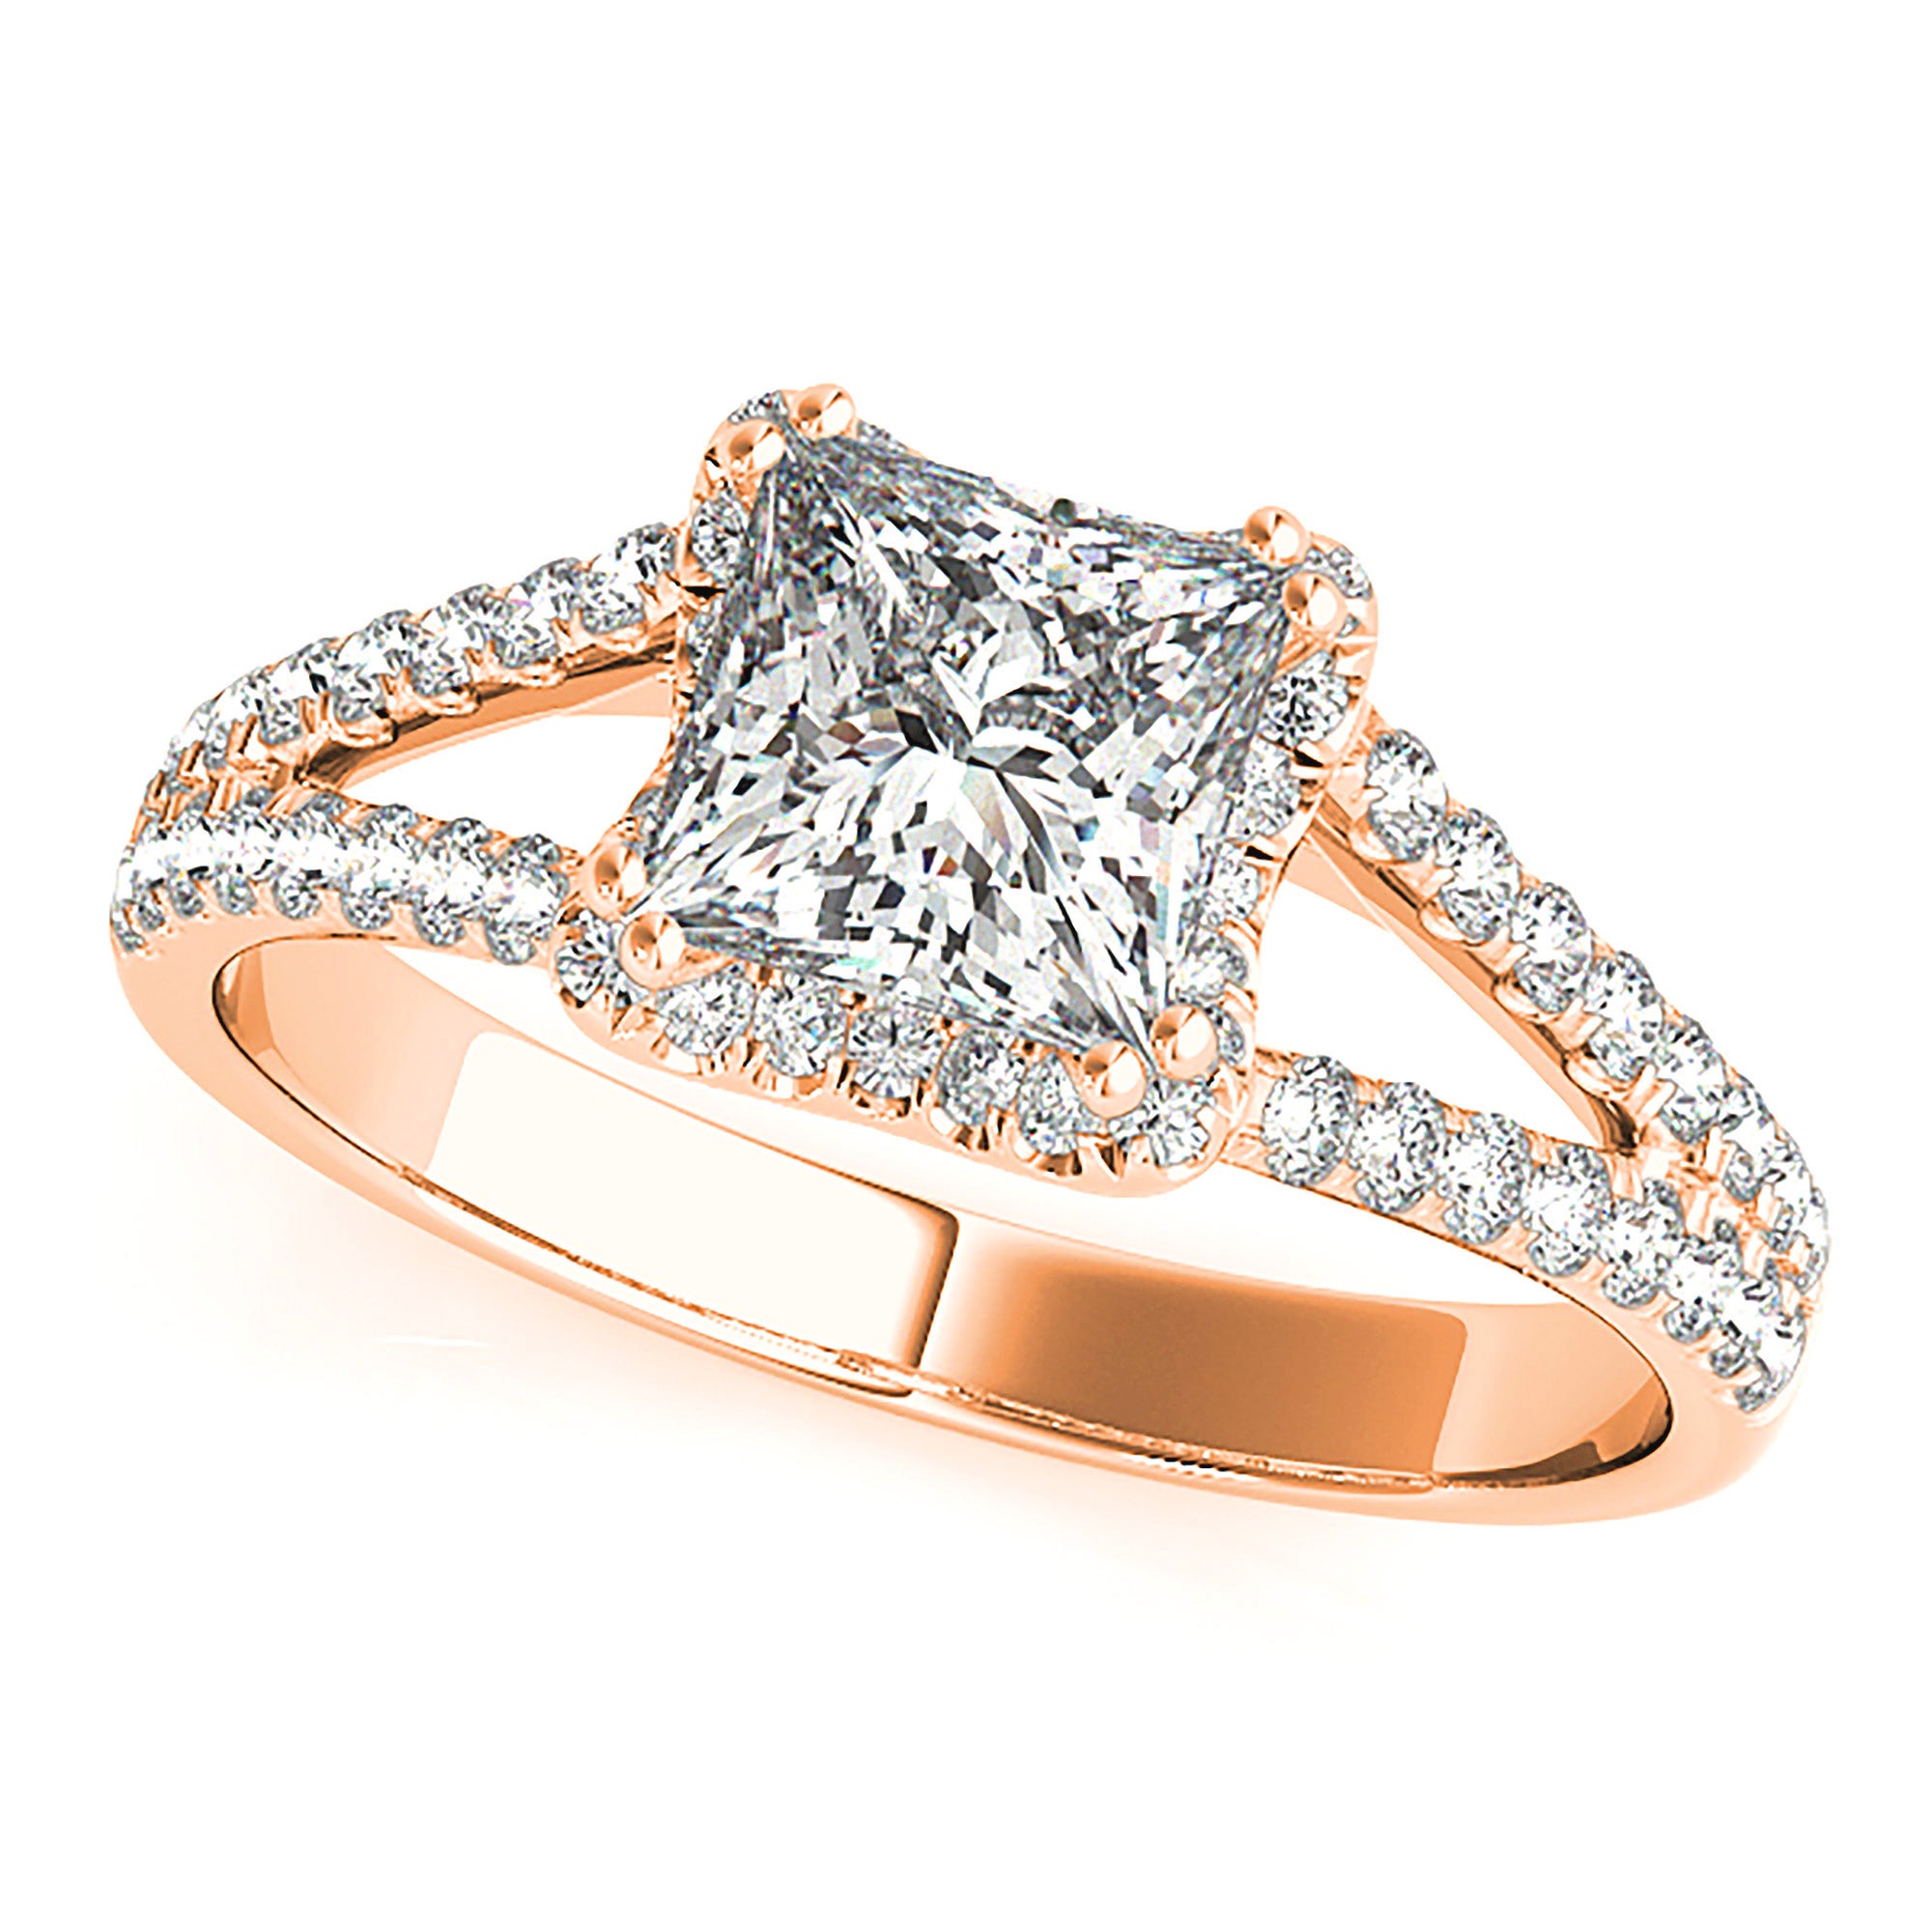 Halo Princess Cut Diamond Engagement Ring-in 14K/18K White, Yellow, Rose Gold and Platinum - Christmas Jewelry Gift -VIRABYANI